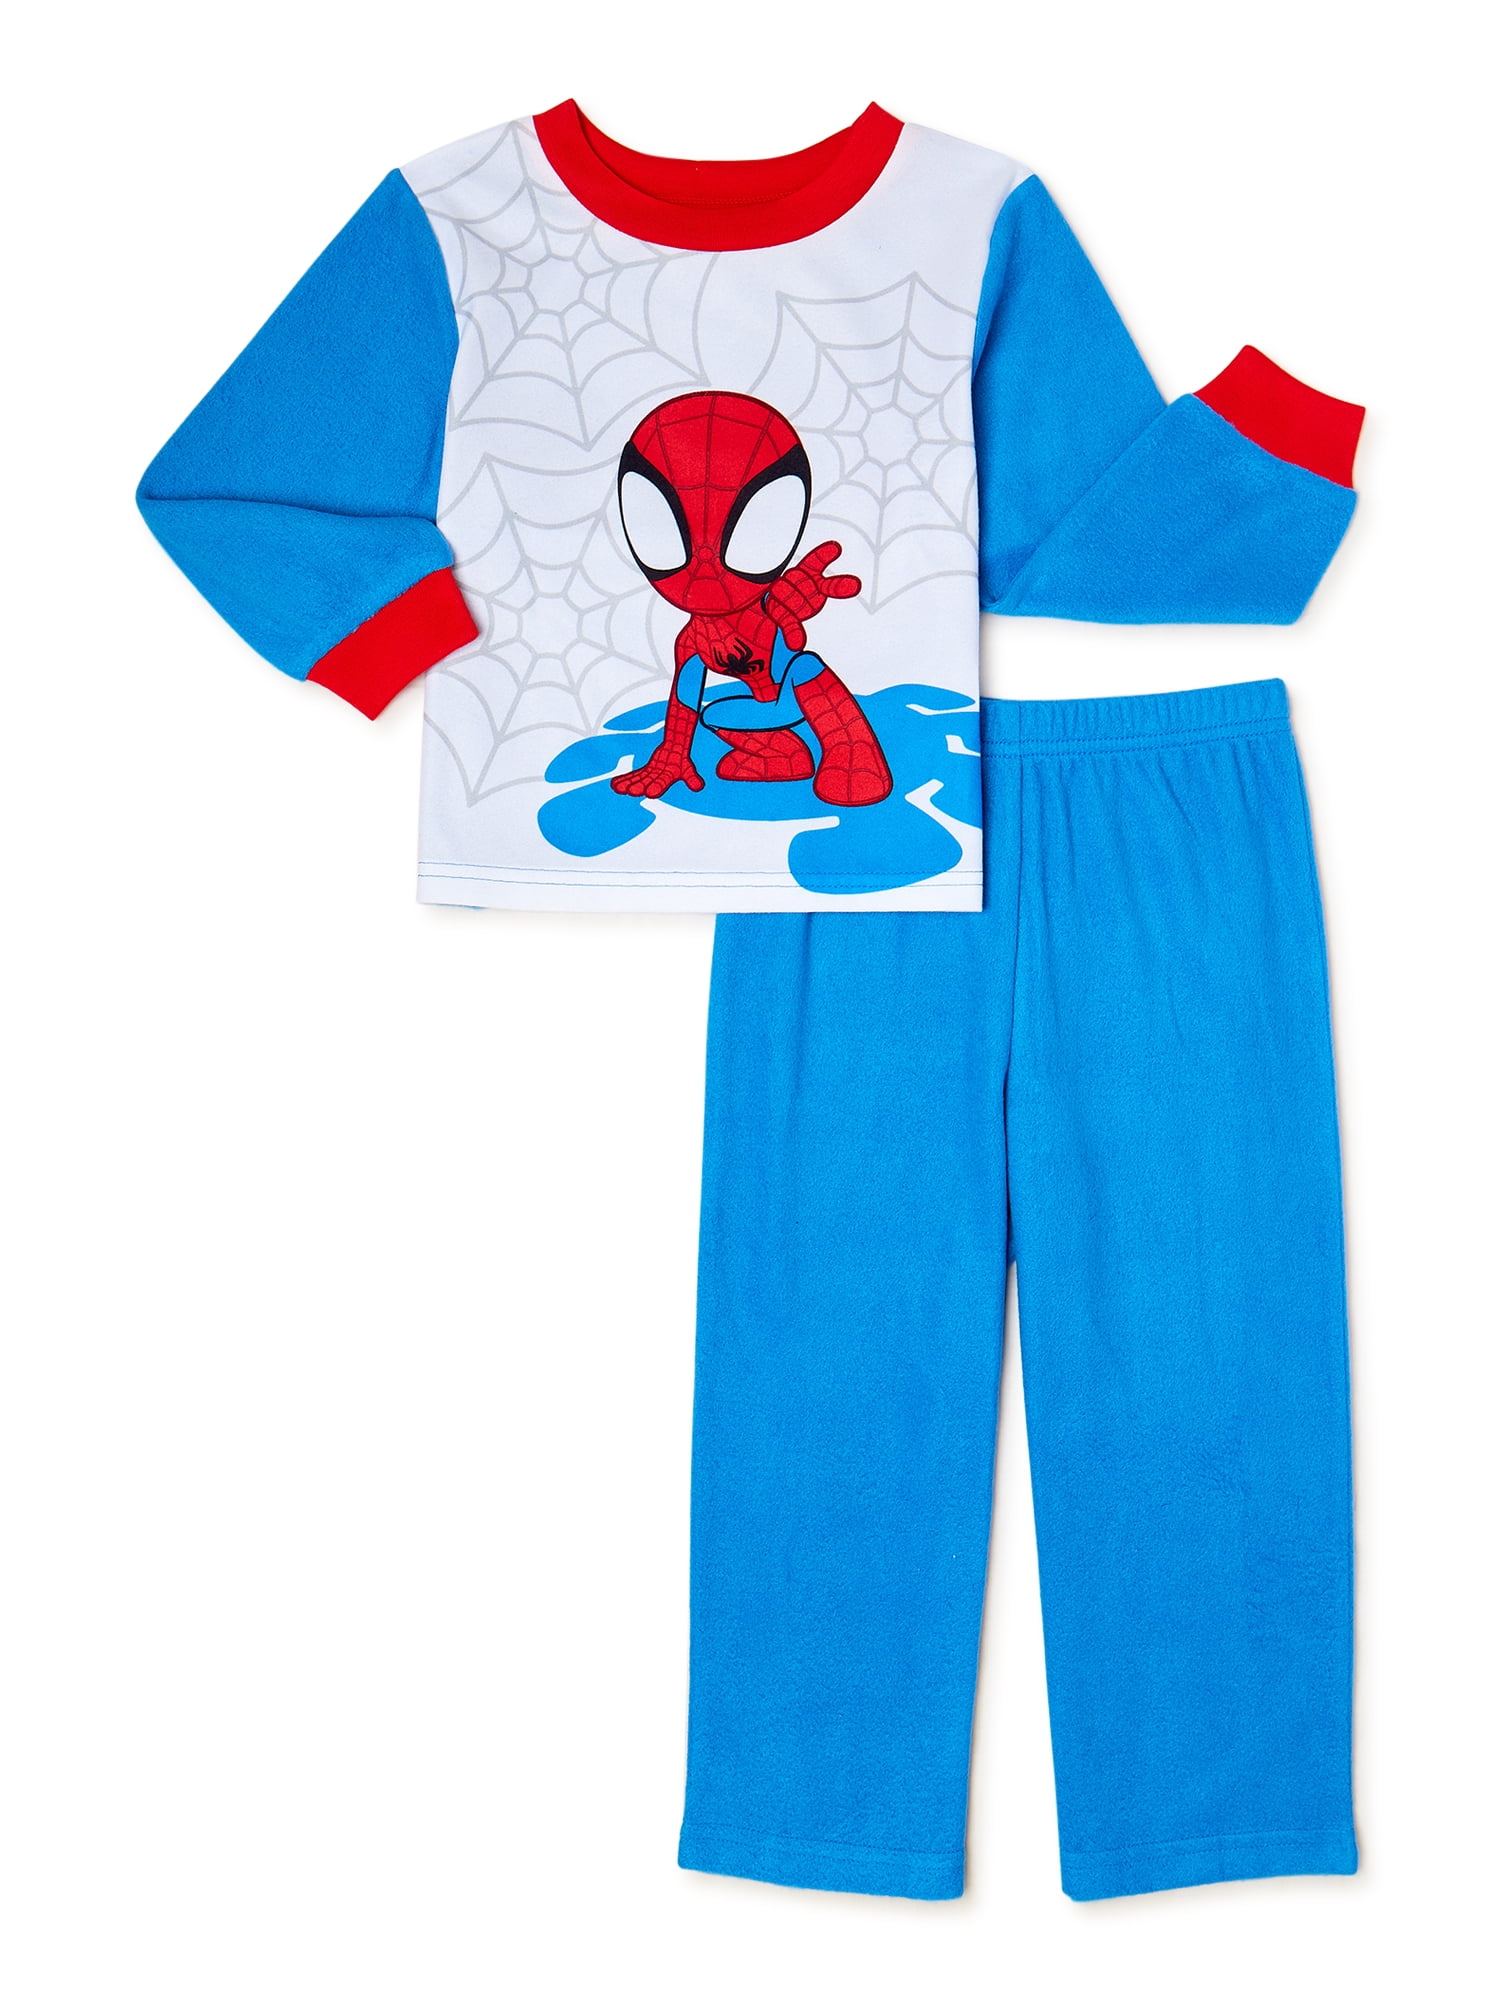 Marvel Spiderman Pajamas for Toddler Boys 2-Piece long sleeve PJ Set Size 5T 